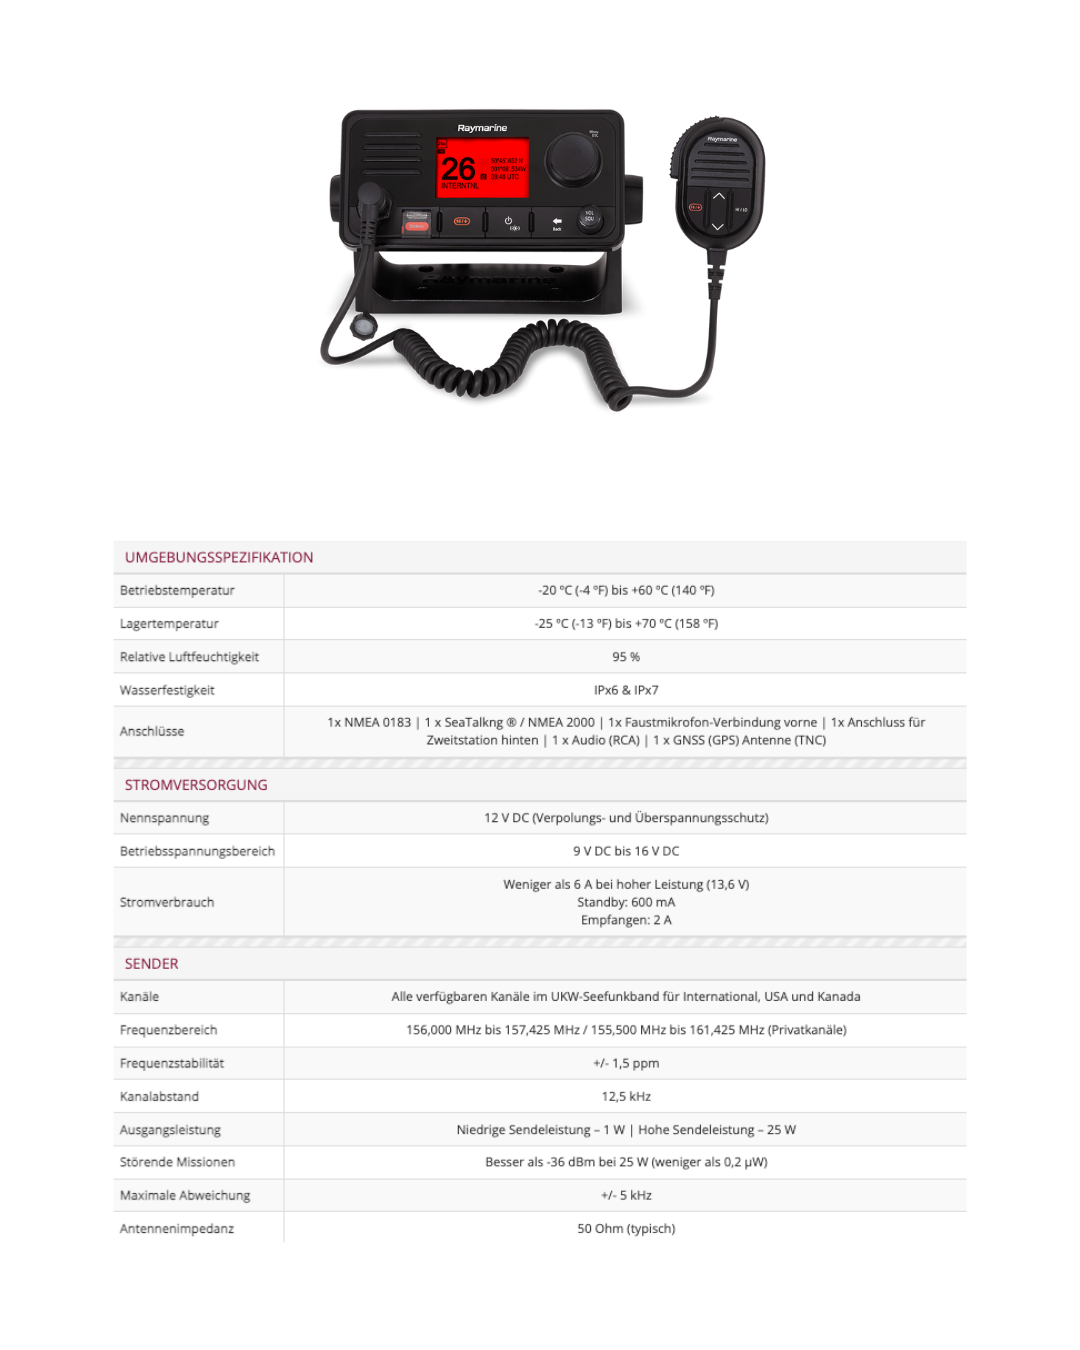 Ray63 DCS-Funkgerät mit ATIS und GNSS (GPS)